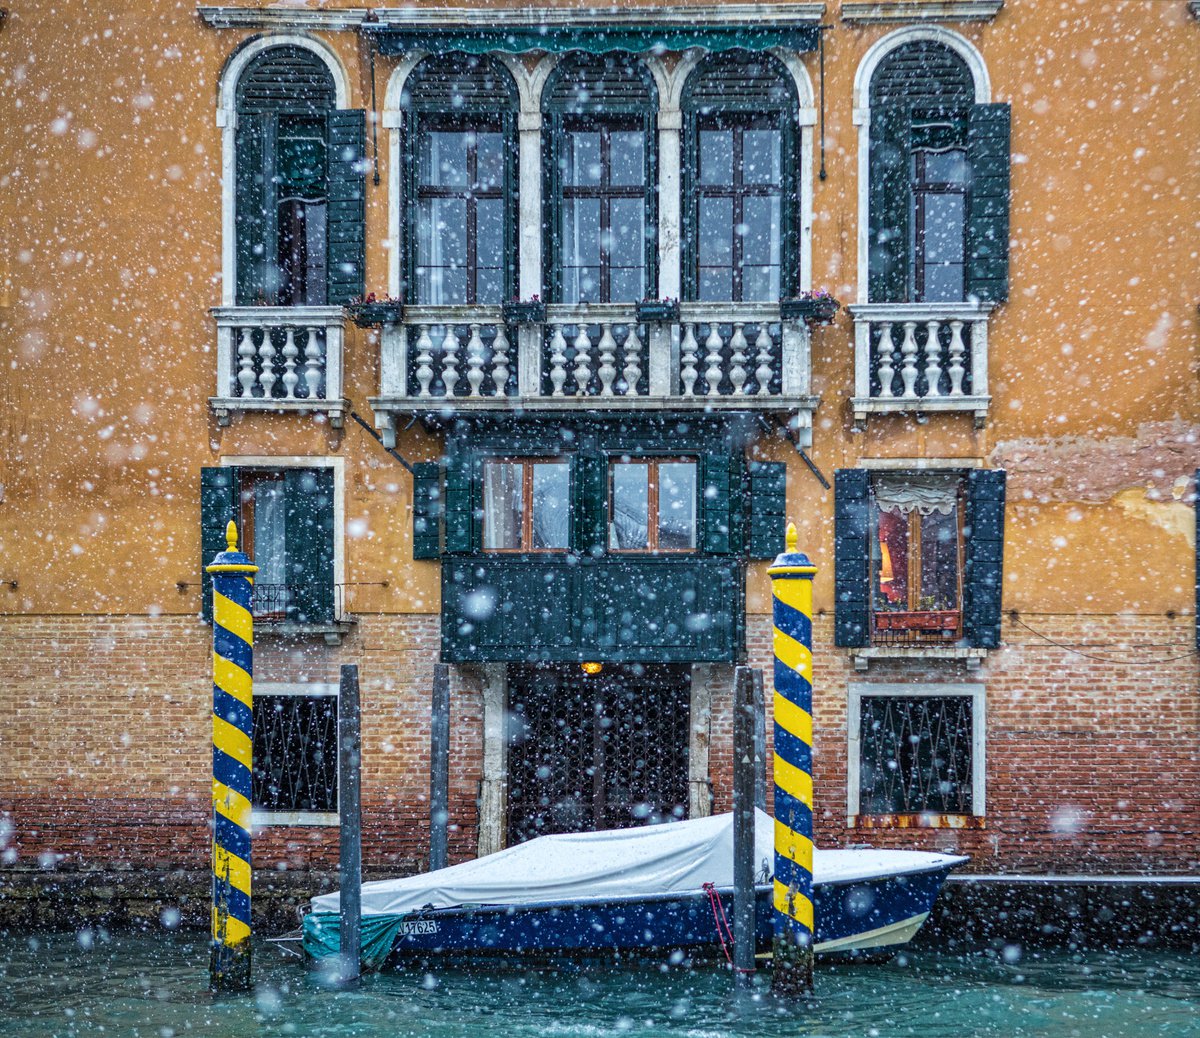 Venice 10. Grand Canal 2 by Pavel Oskin